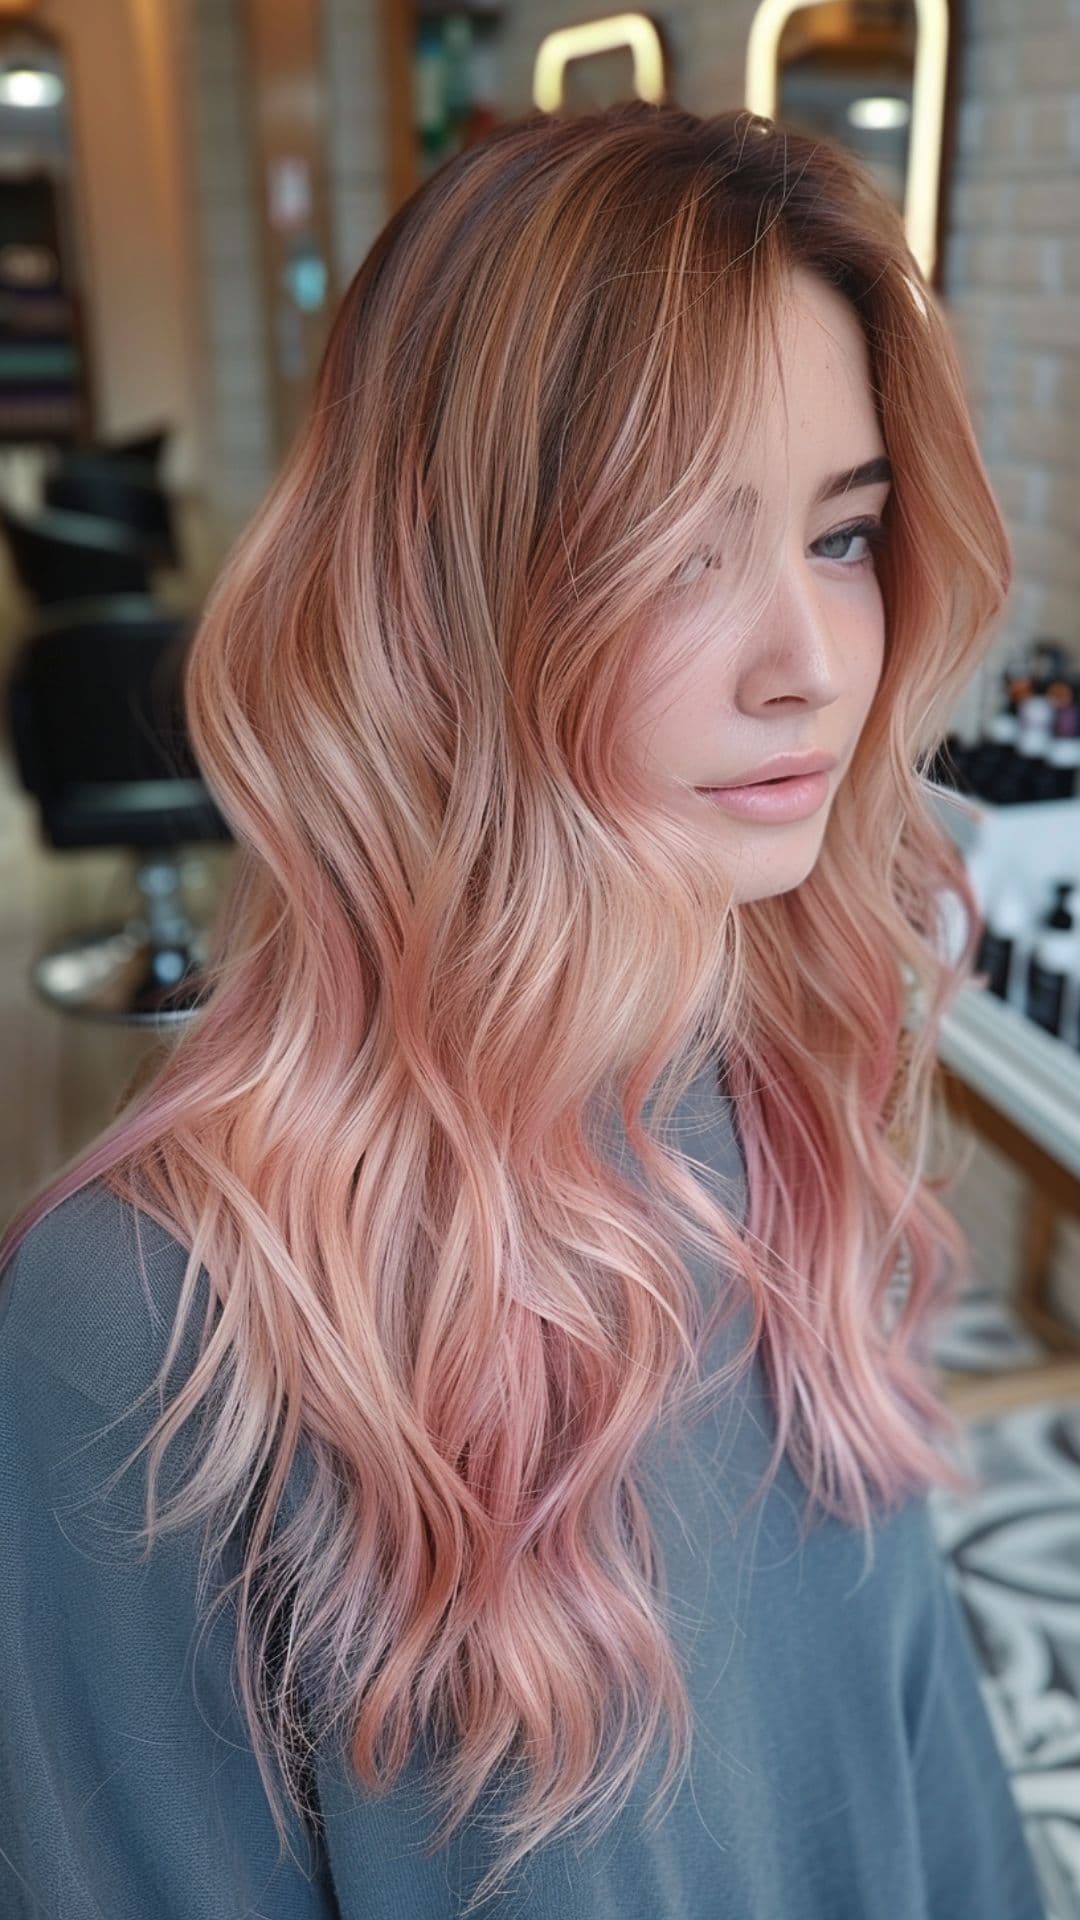 A woman modelling a peachy pink balayage hair.